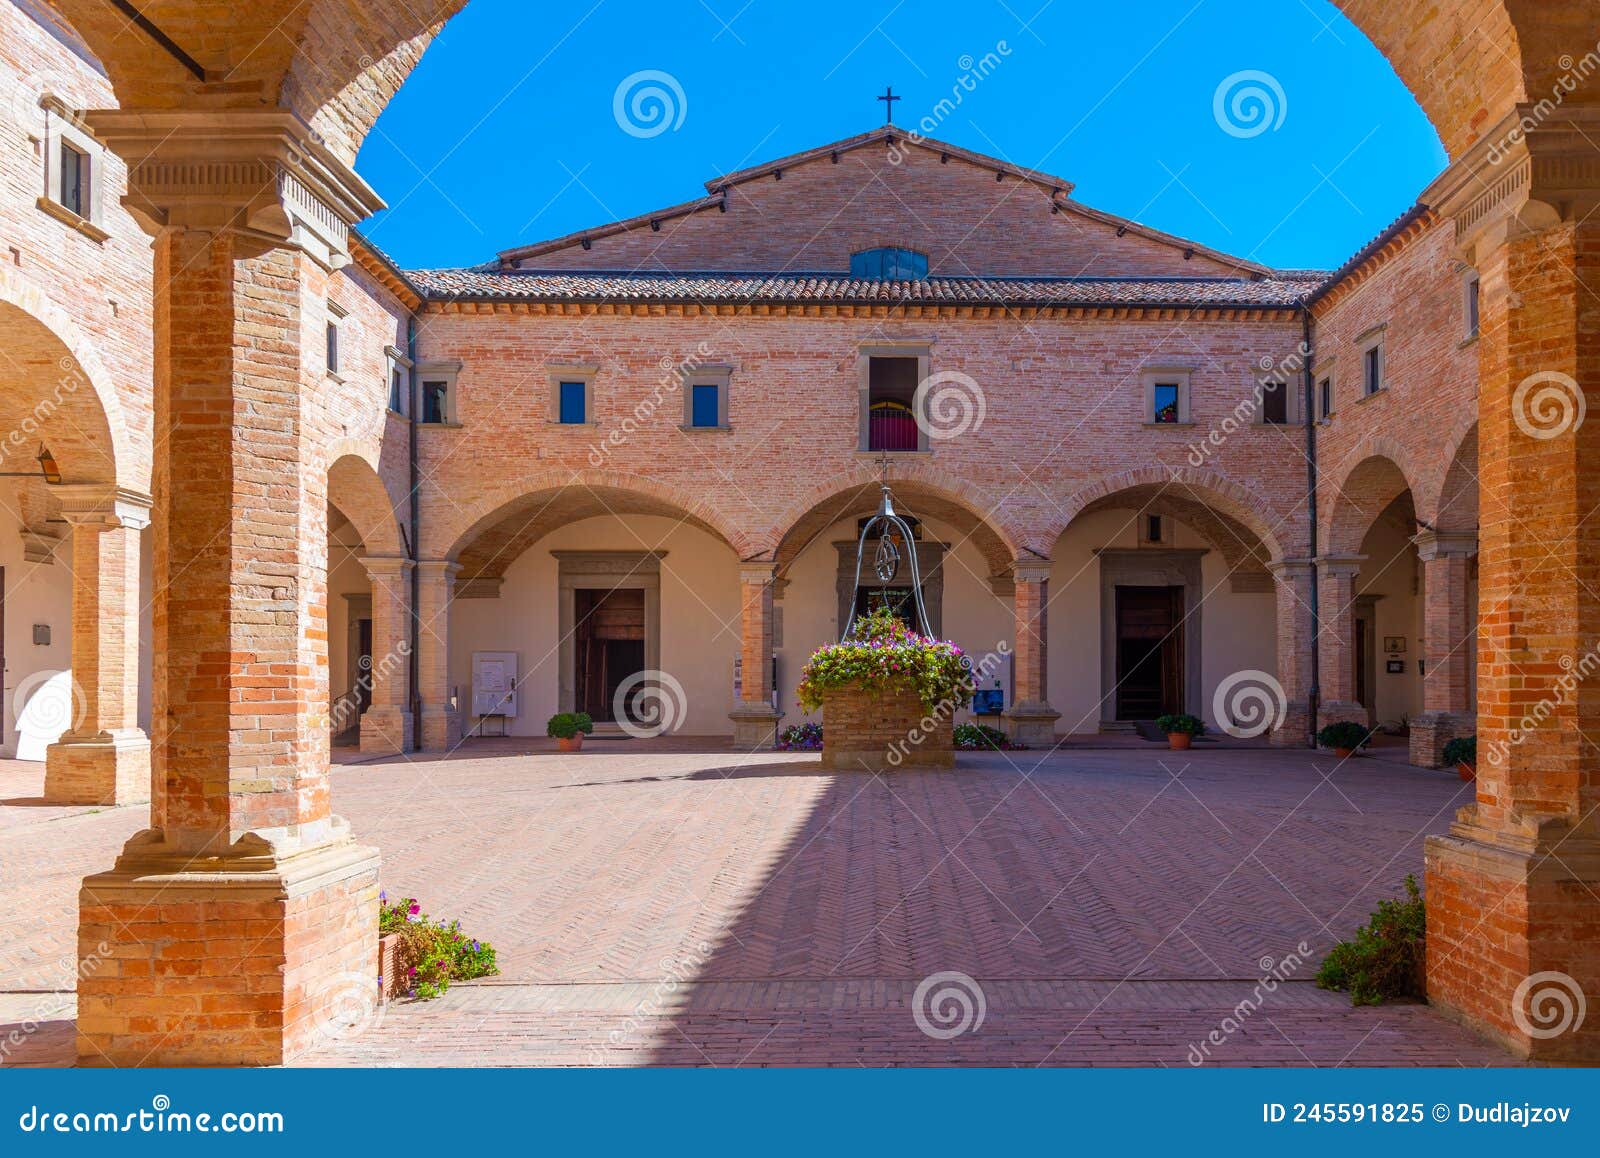 courtyard of basilica of sant'ubaldo in gubbio, italy